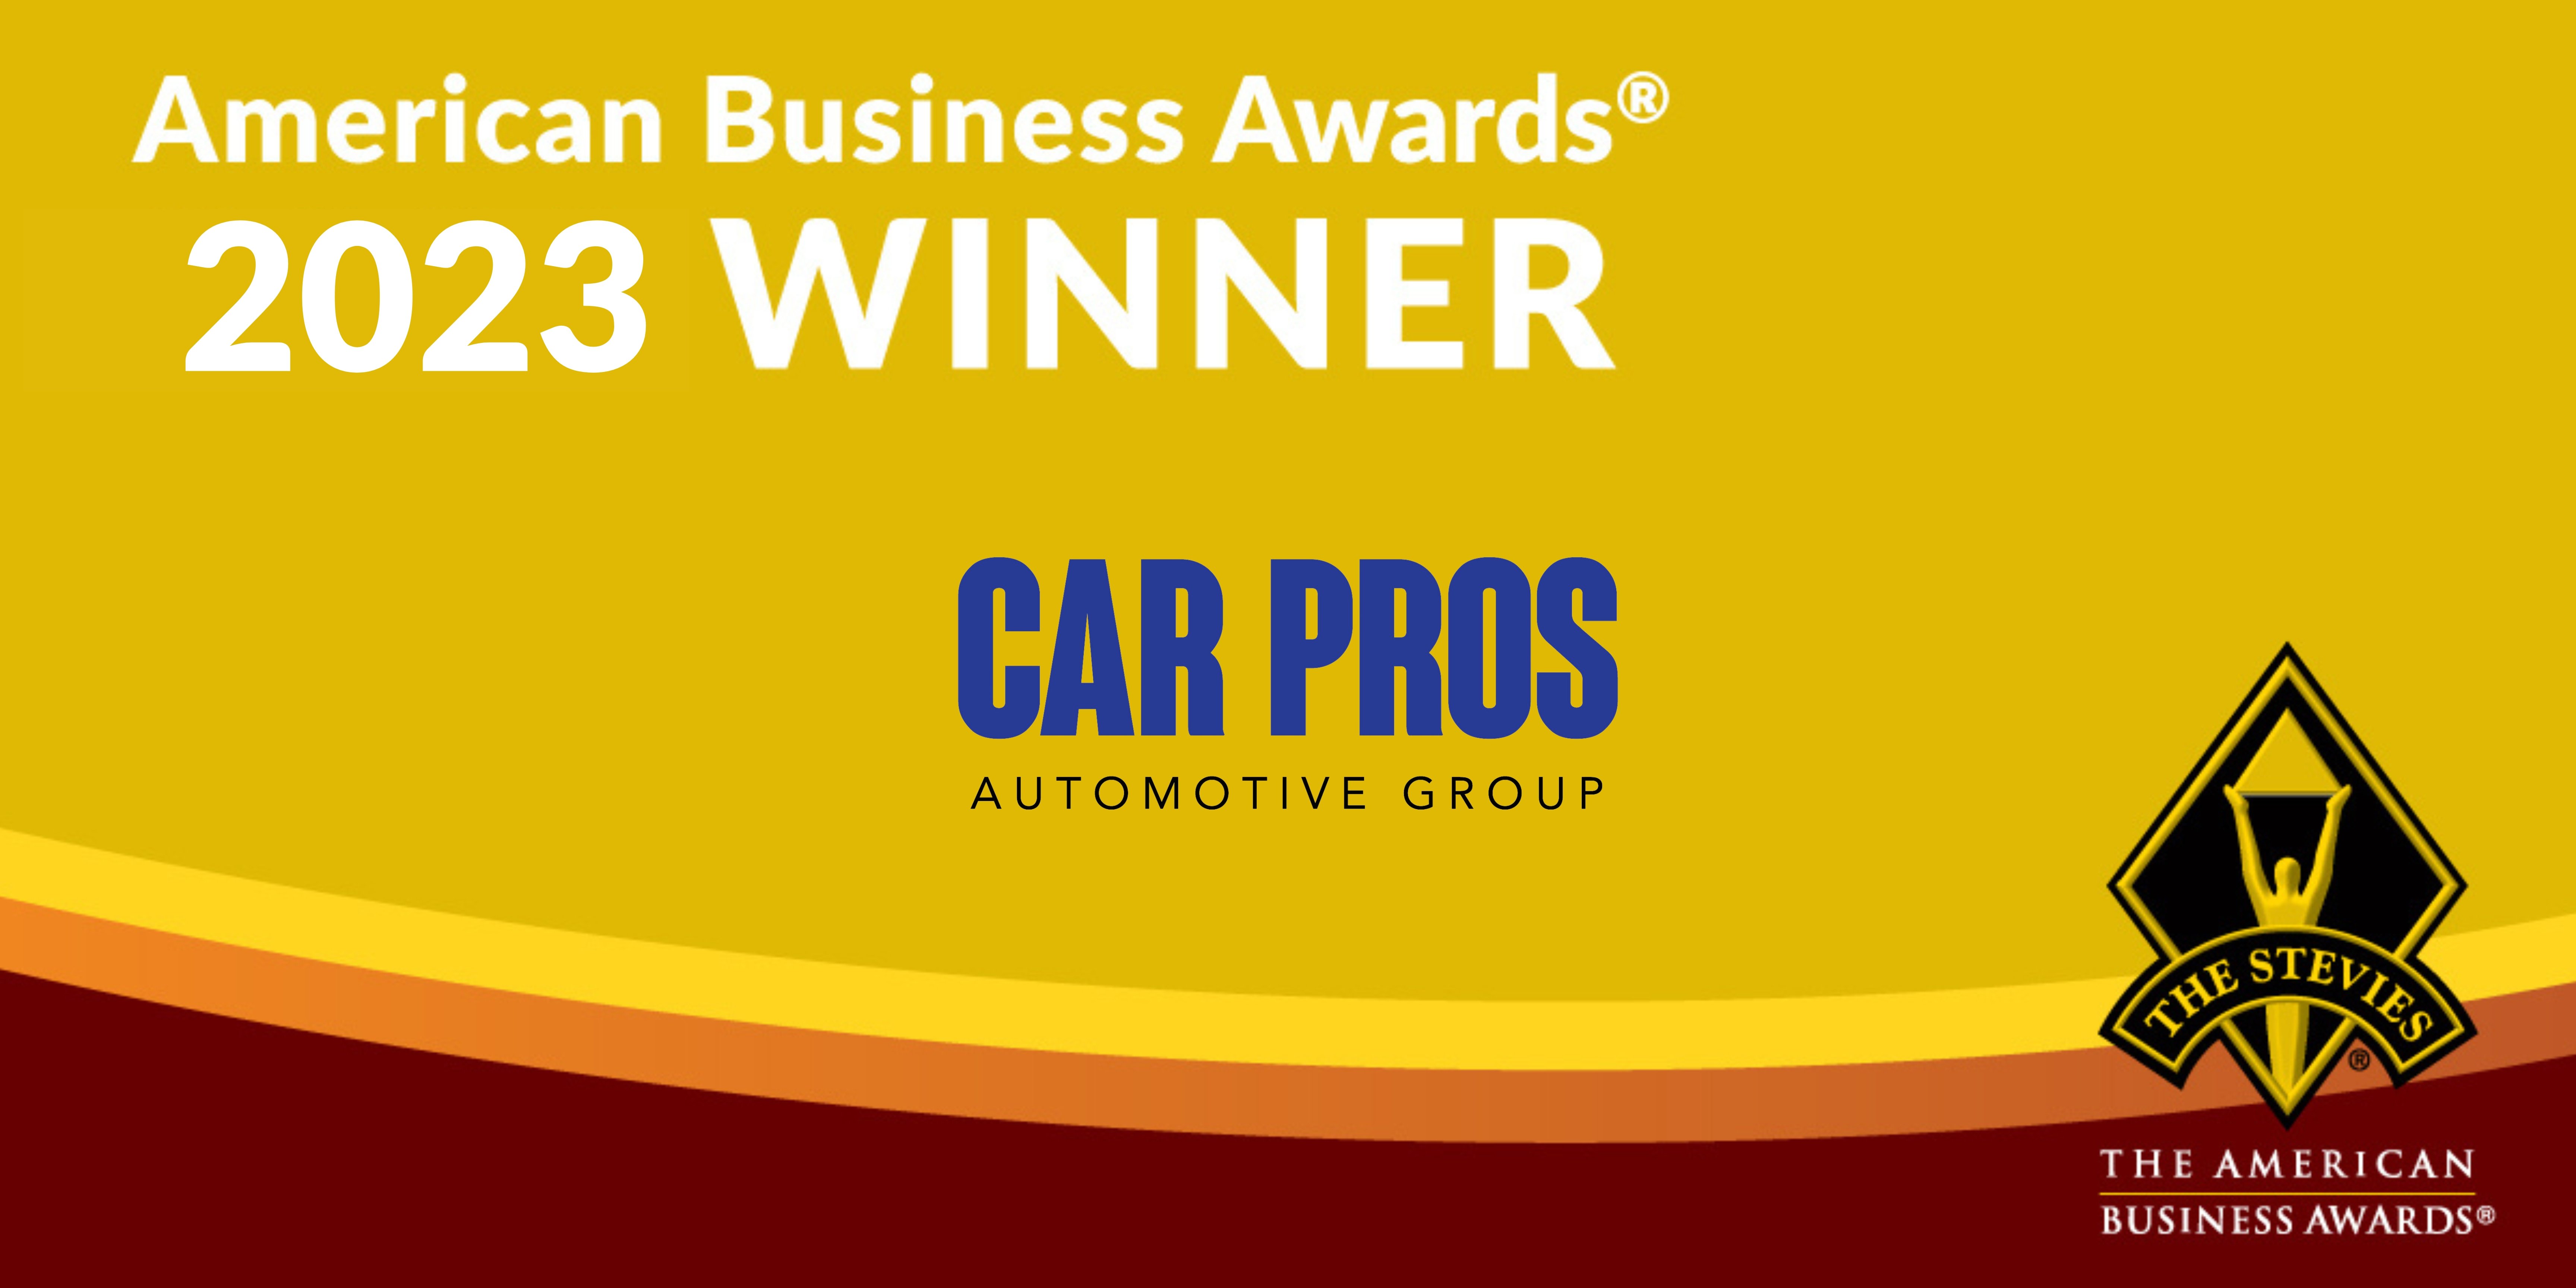 Car Pros Fueling Progress for DE&I Initiatives in Automotive Industry